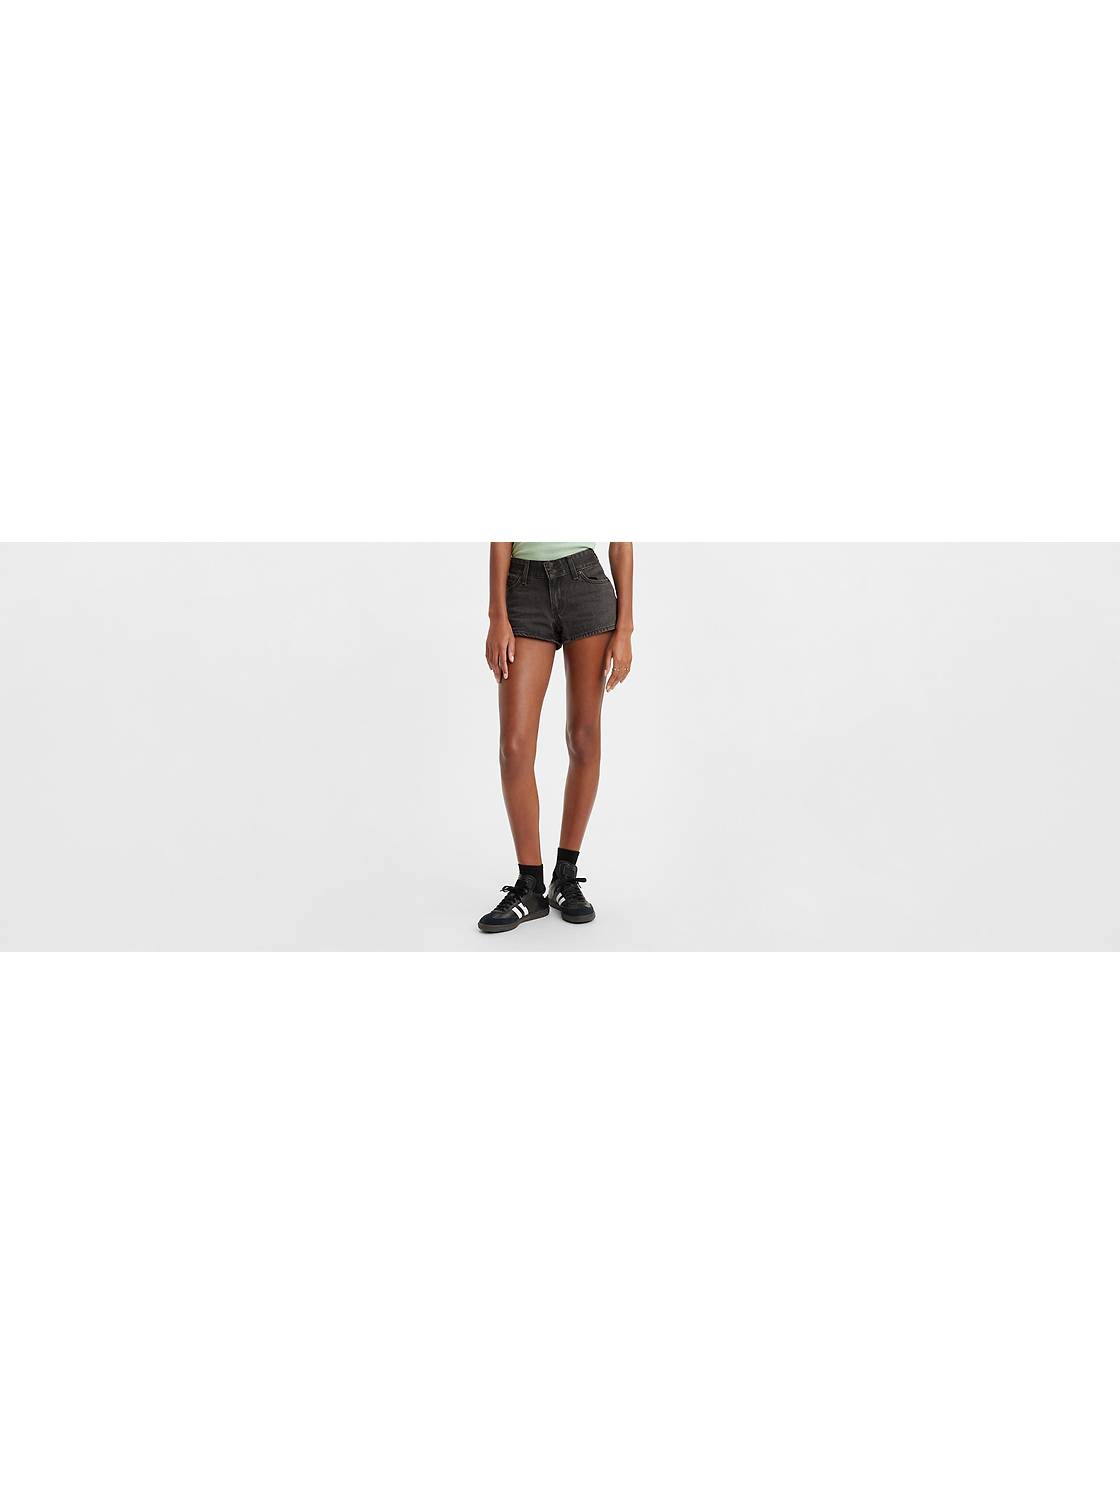 Women's Denim Shorts | Jean Shorts| Levi's® GB